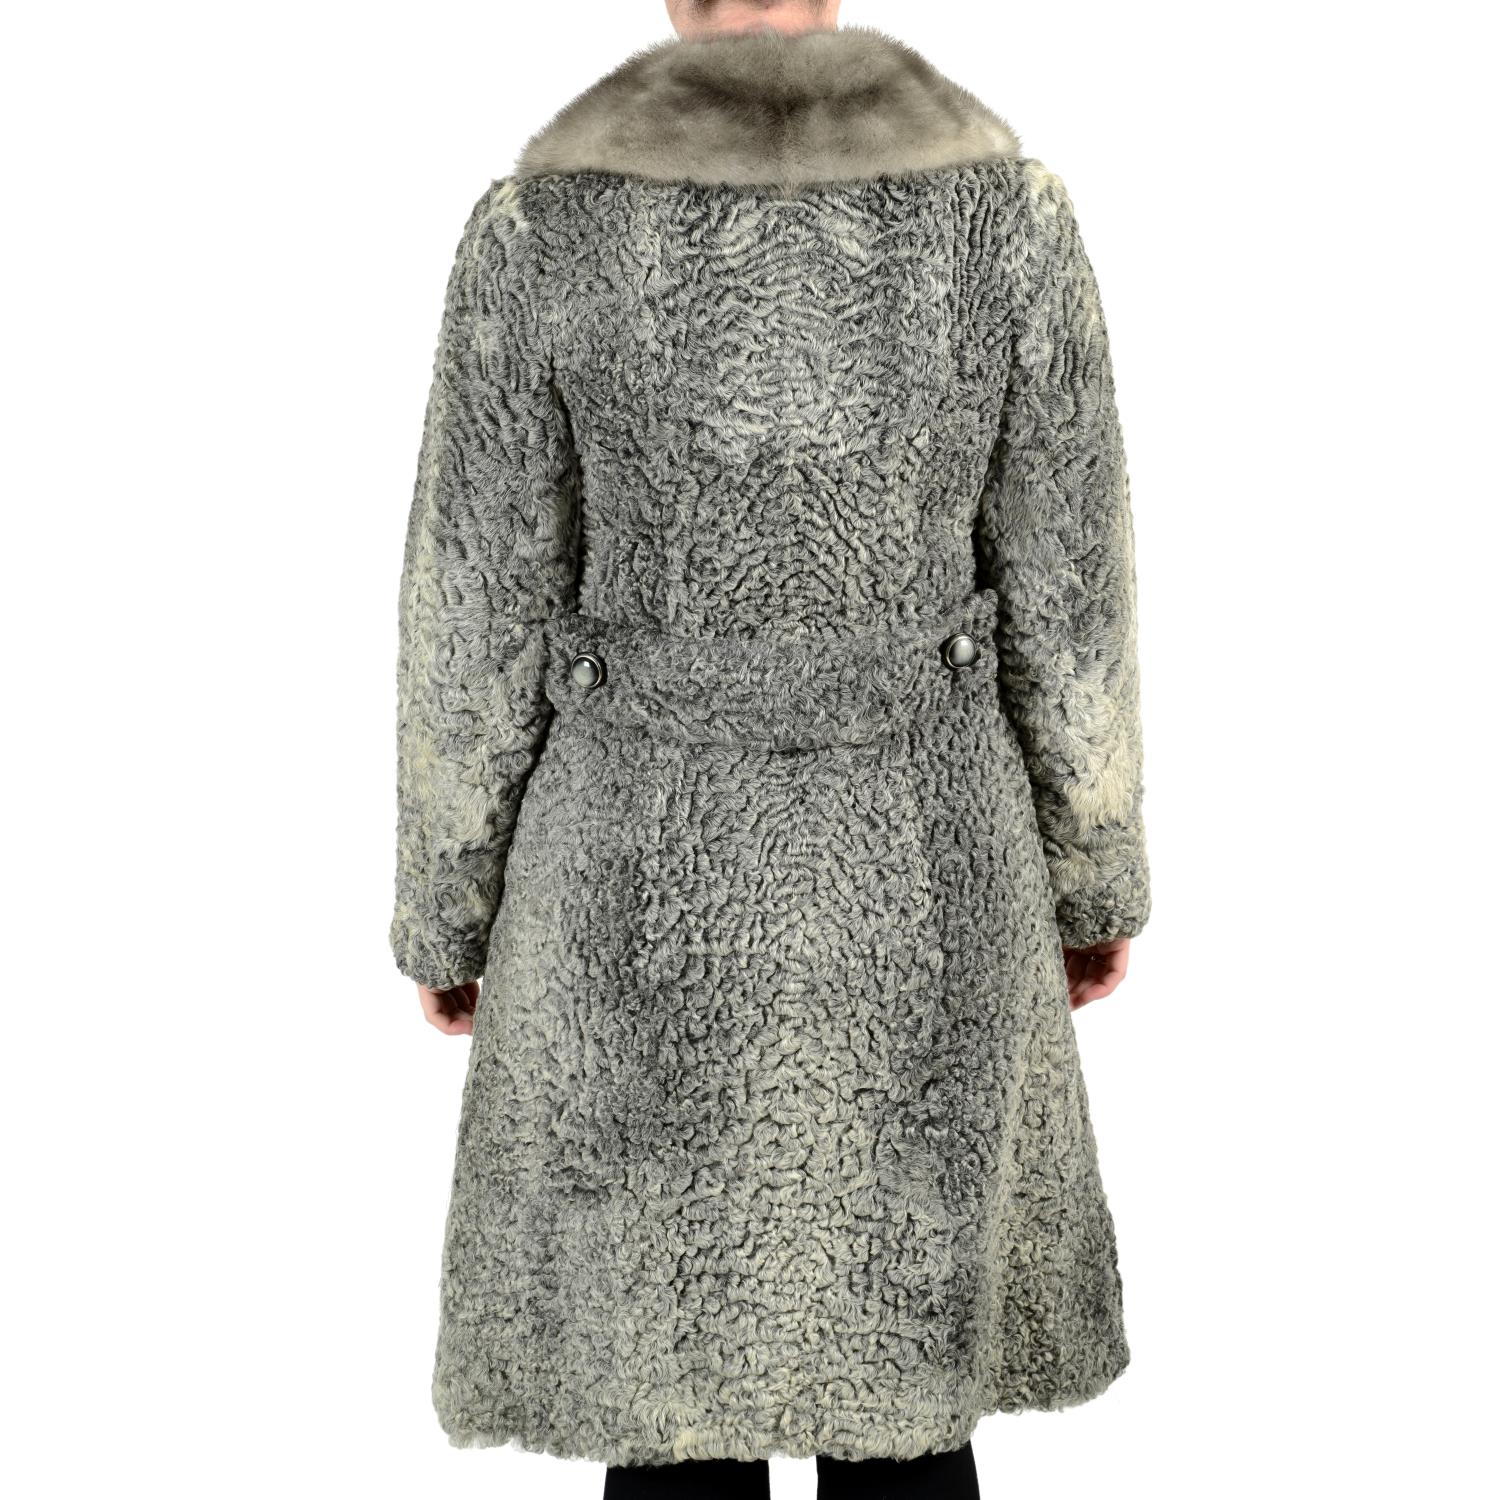 A three-quarter length karakul grey coat with sapphire mink collar and karakul hat. - Image 2 of 4